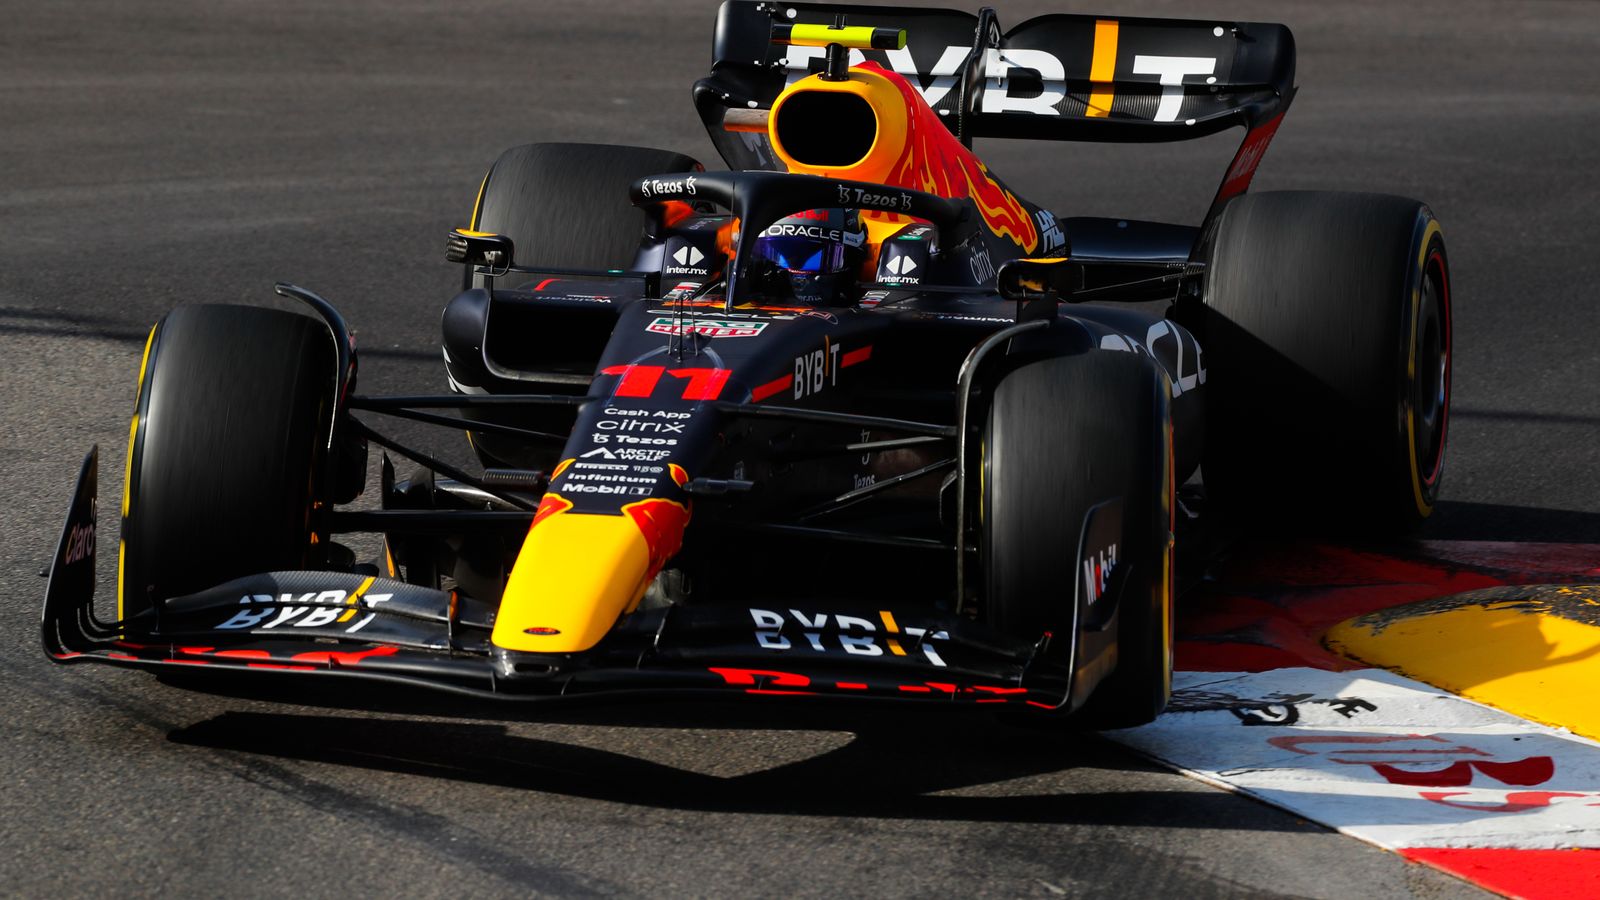 Monaco GP: Sergio Perez edges Charles Leclerc in Practice Three, Mercedes in midfield before qualifying